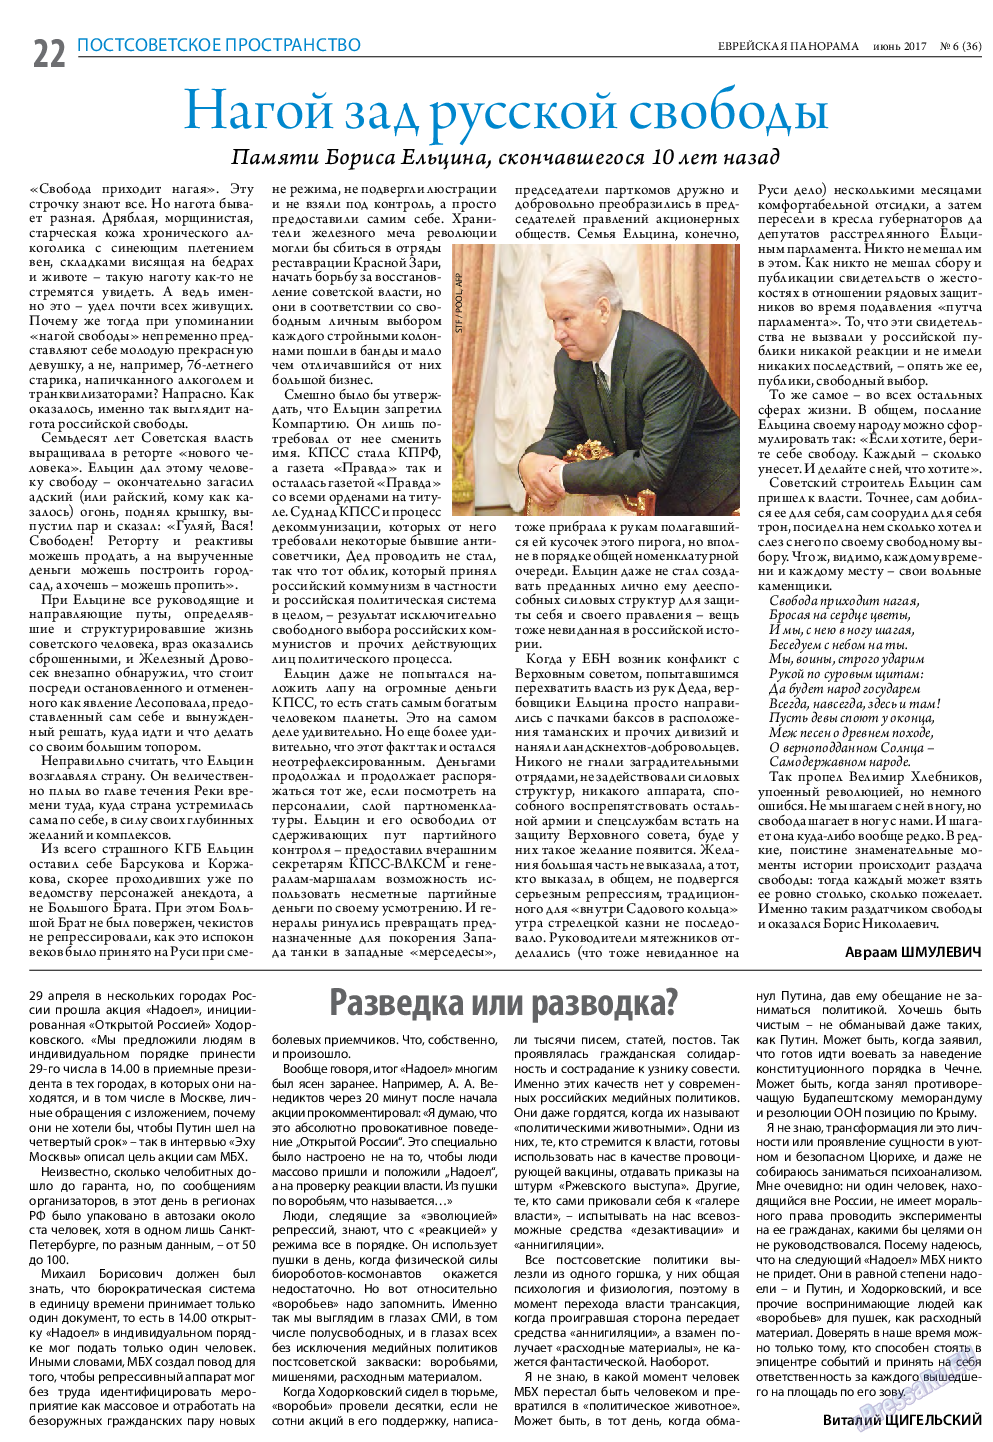 Еврейская панорама, газета. 2017 №6 стр.22